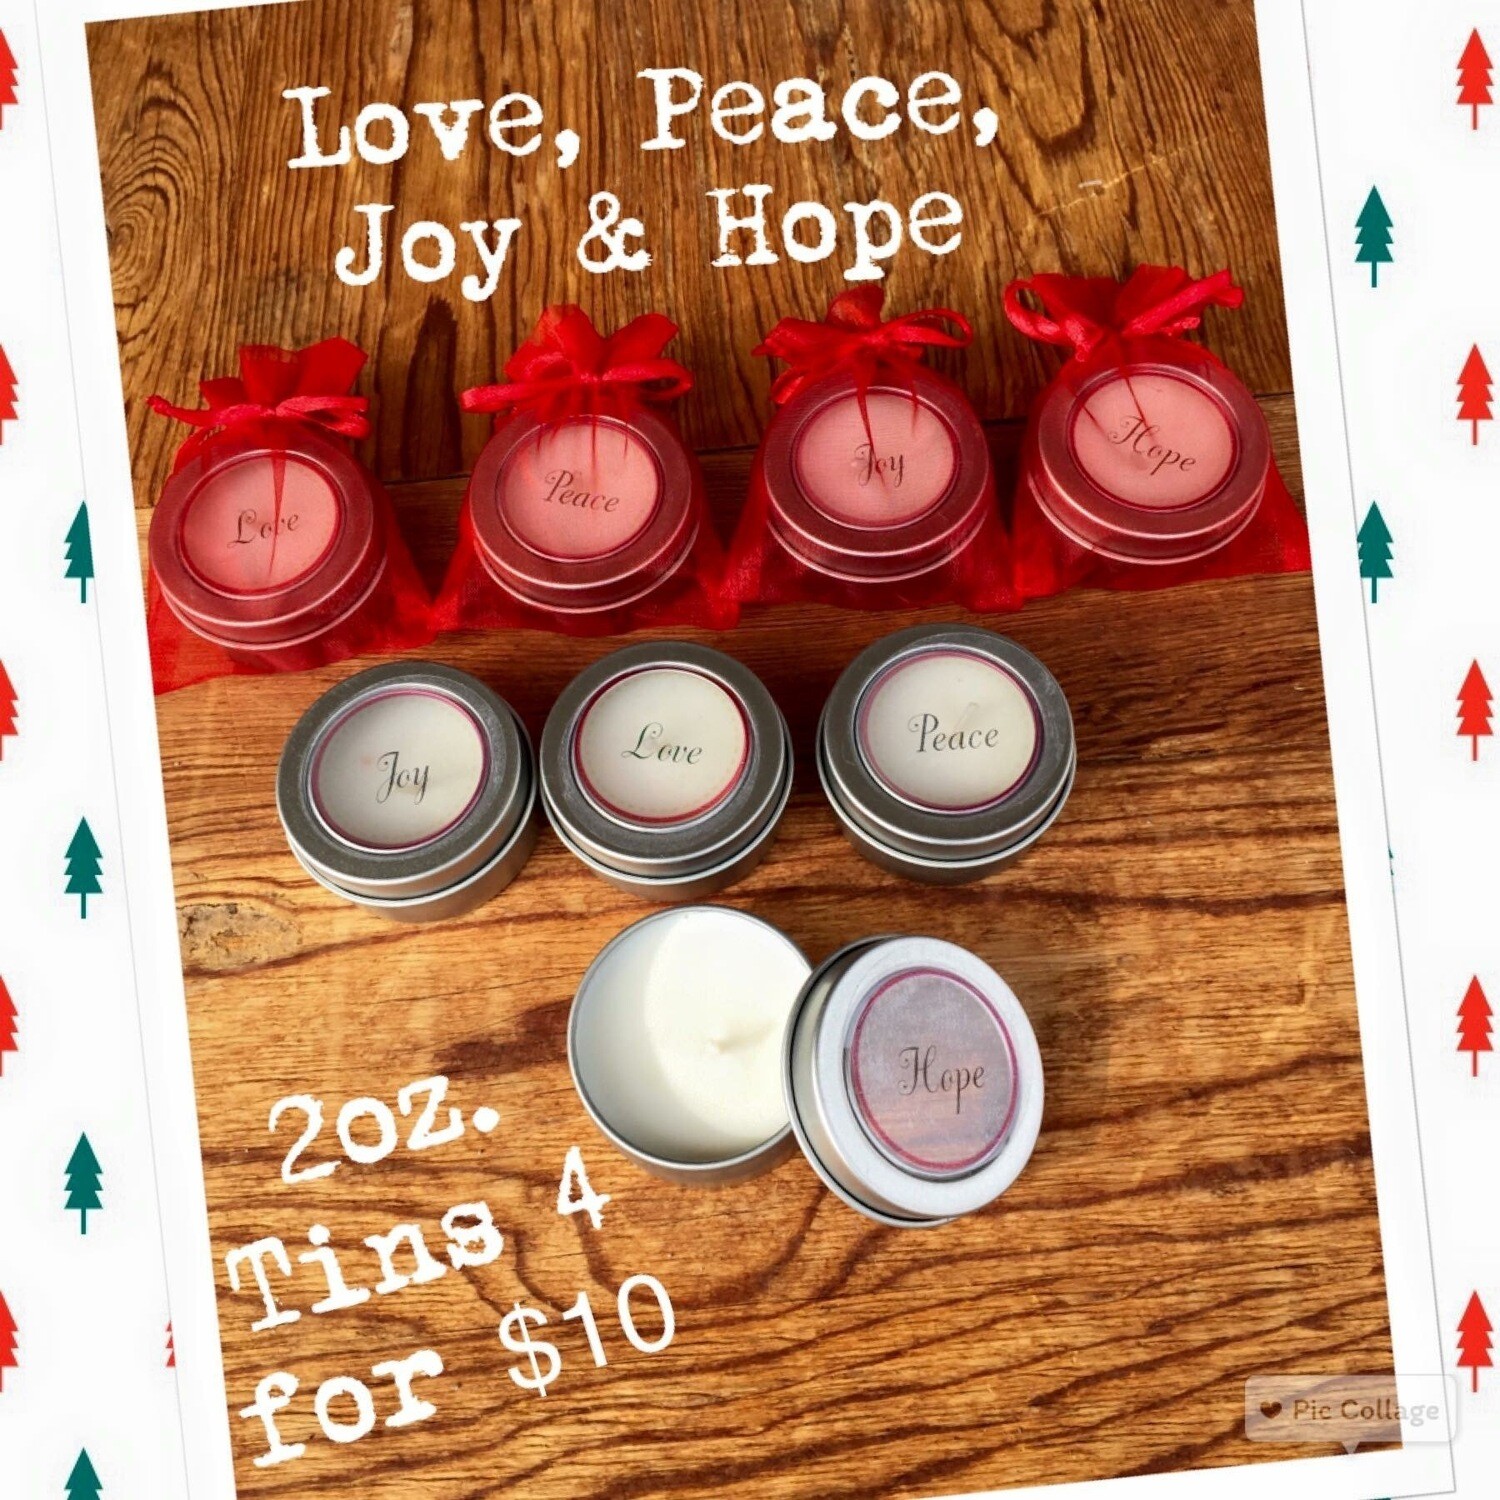 LOVE -PEACE-JOY-HOPE 2 oz. Soy Travel Tin set of 4